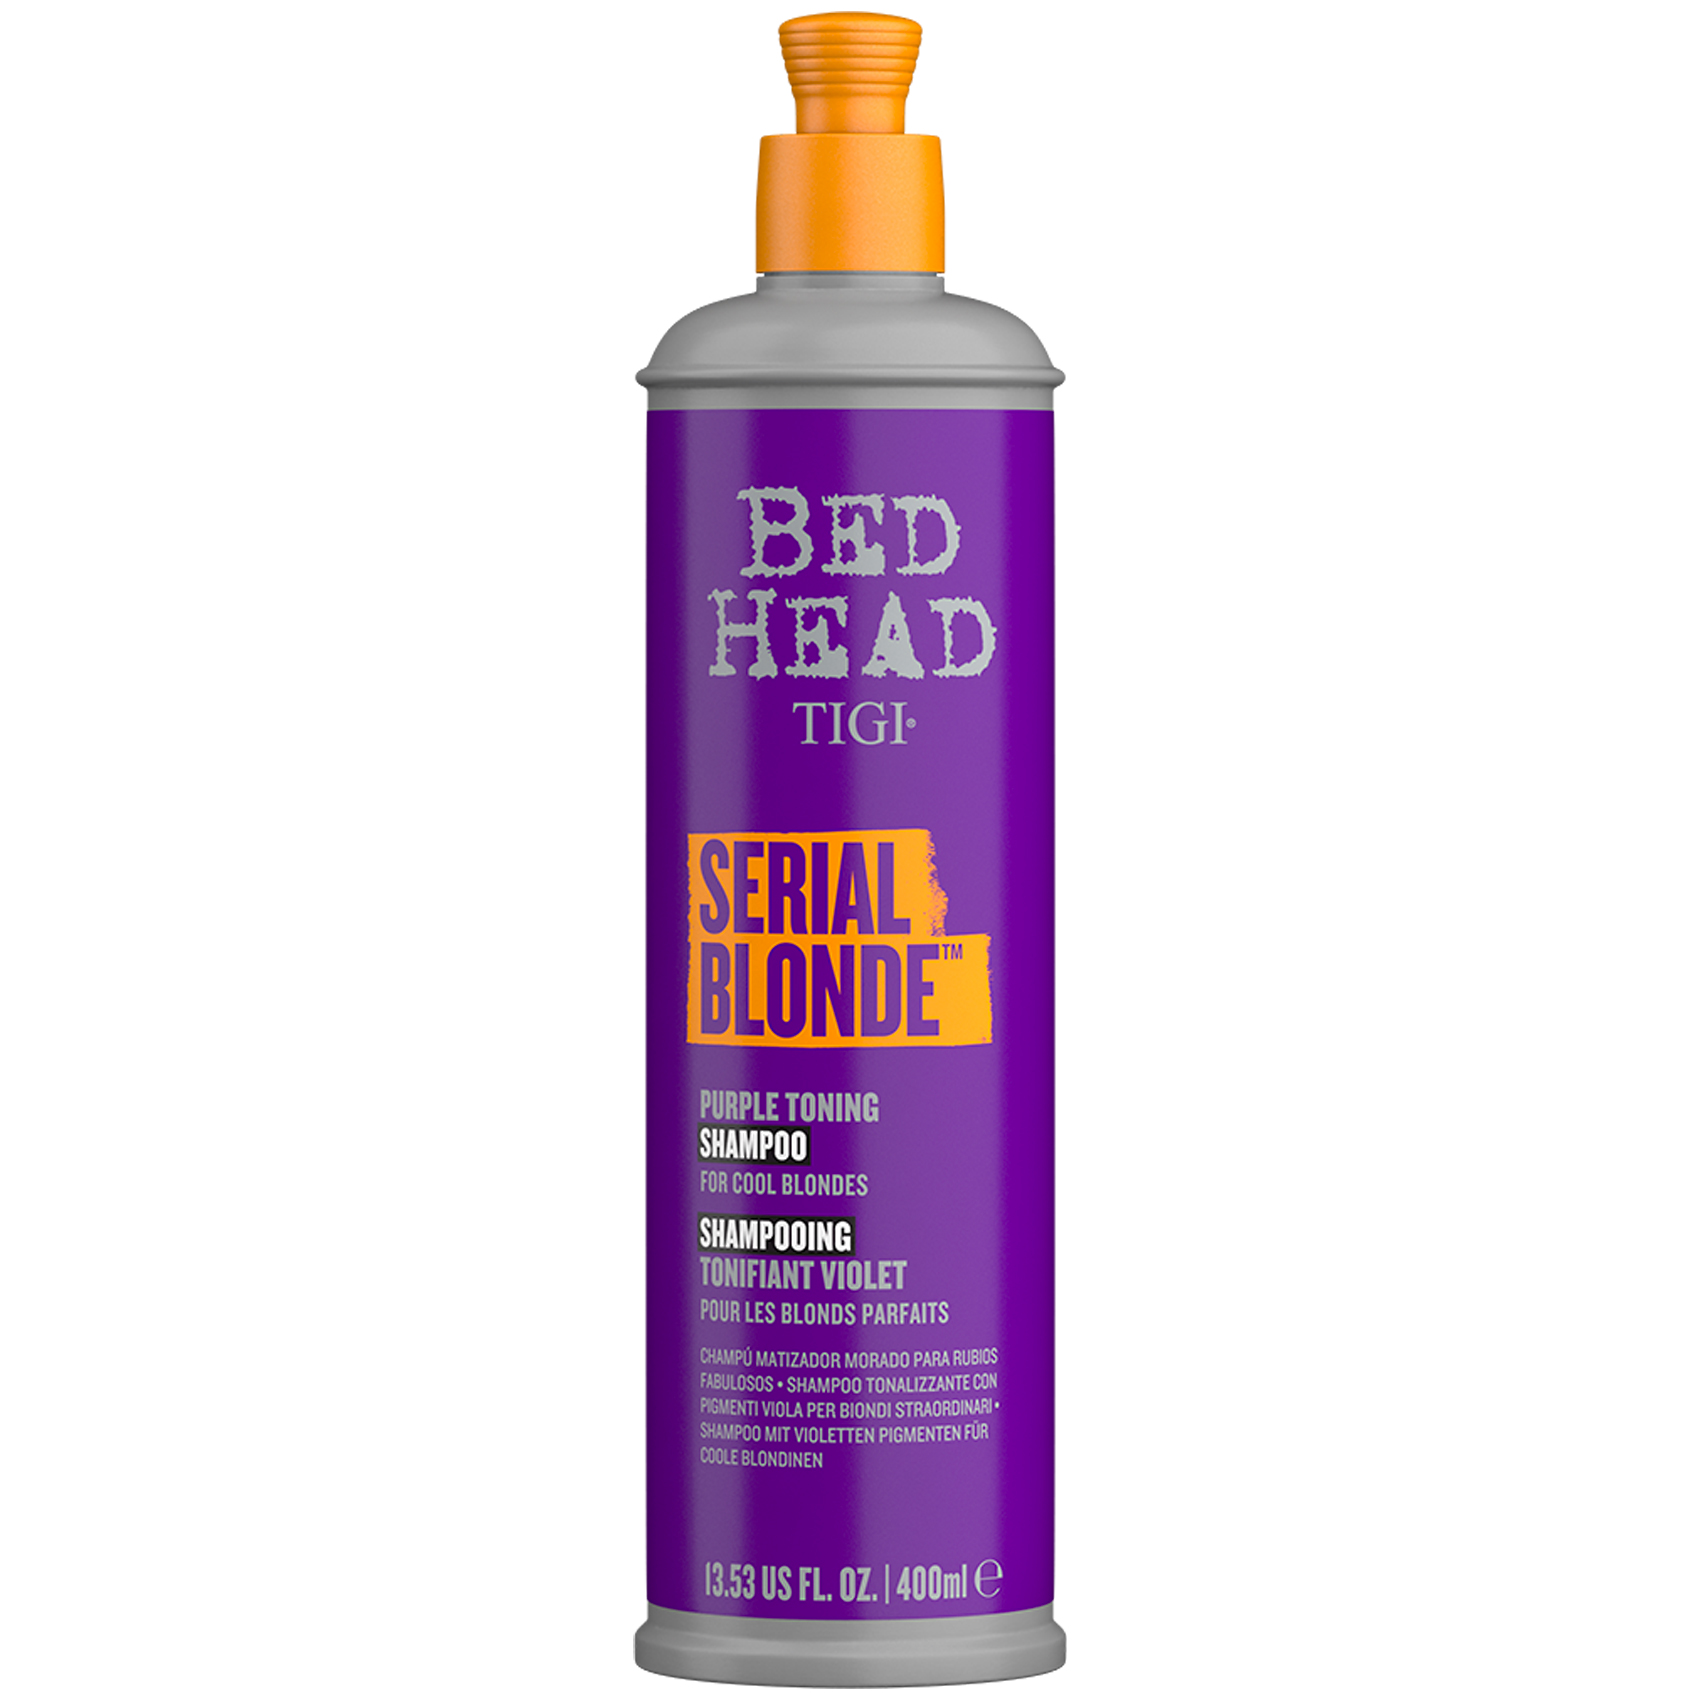 Shampoing Serial Blonde Purple Toning Tigi Bed Head 400 ML 